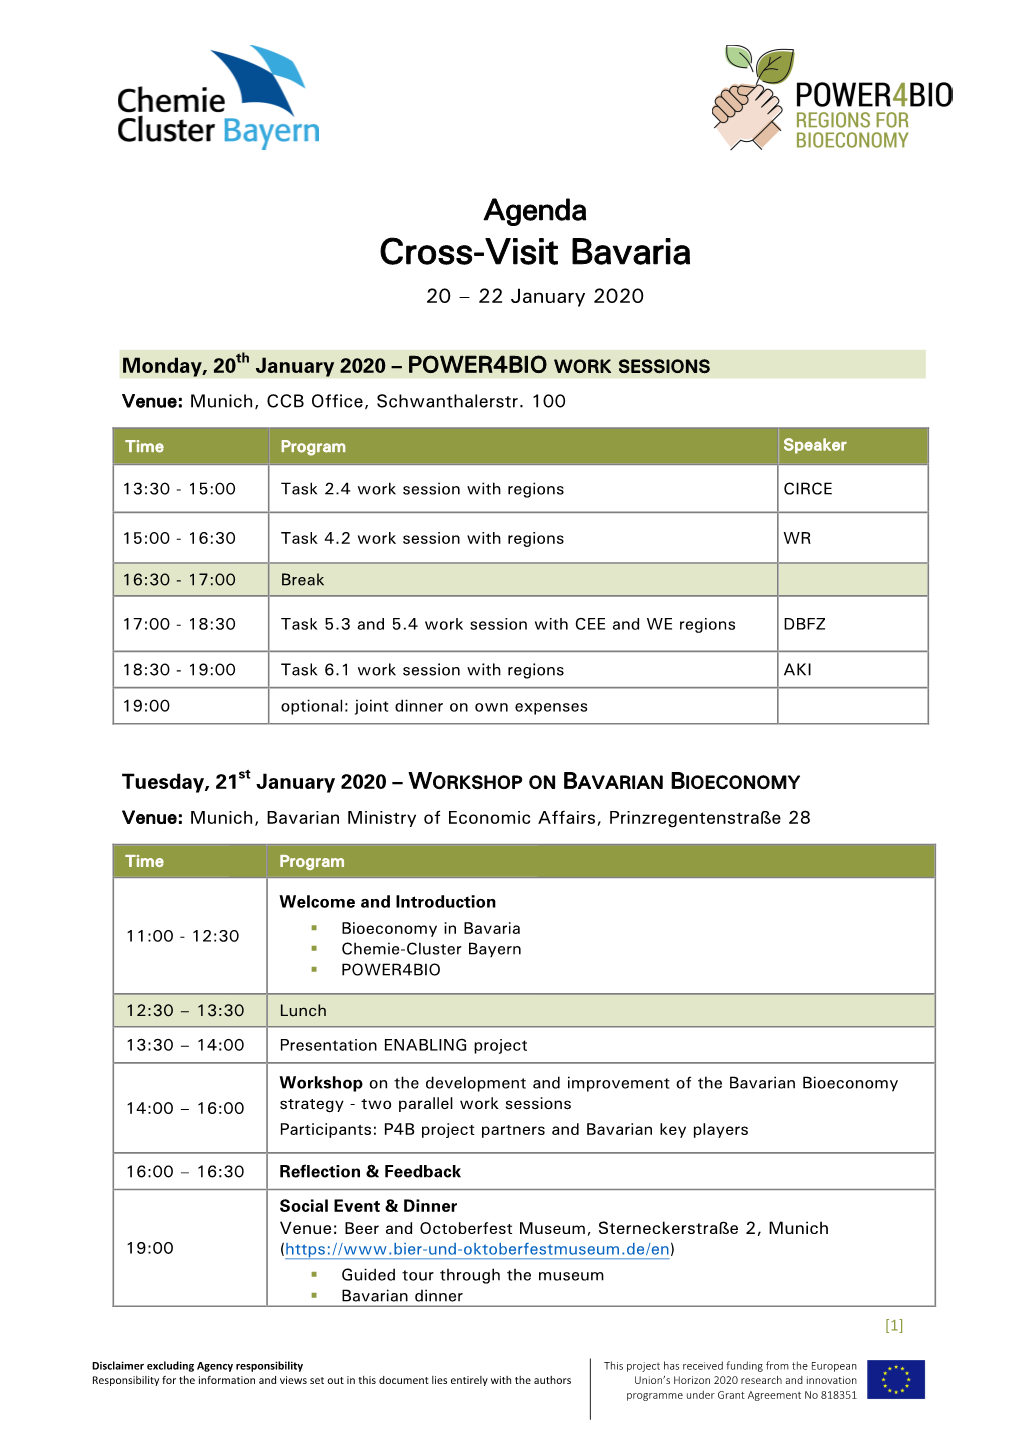 Cross-Visit Bavaria 20 – 22 January 2020